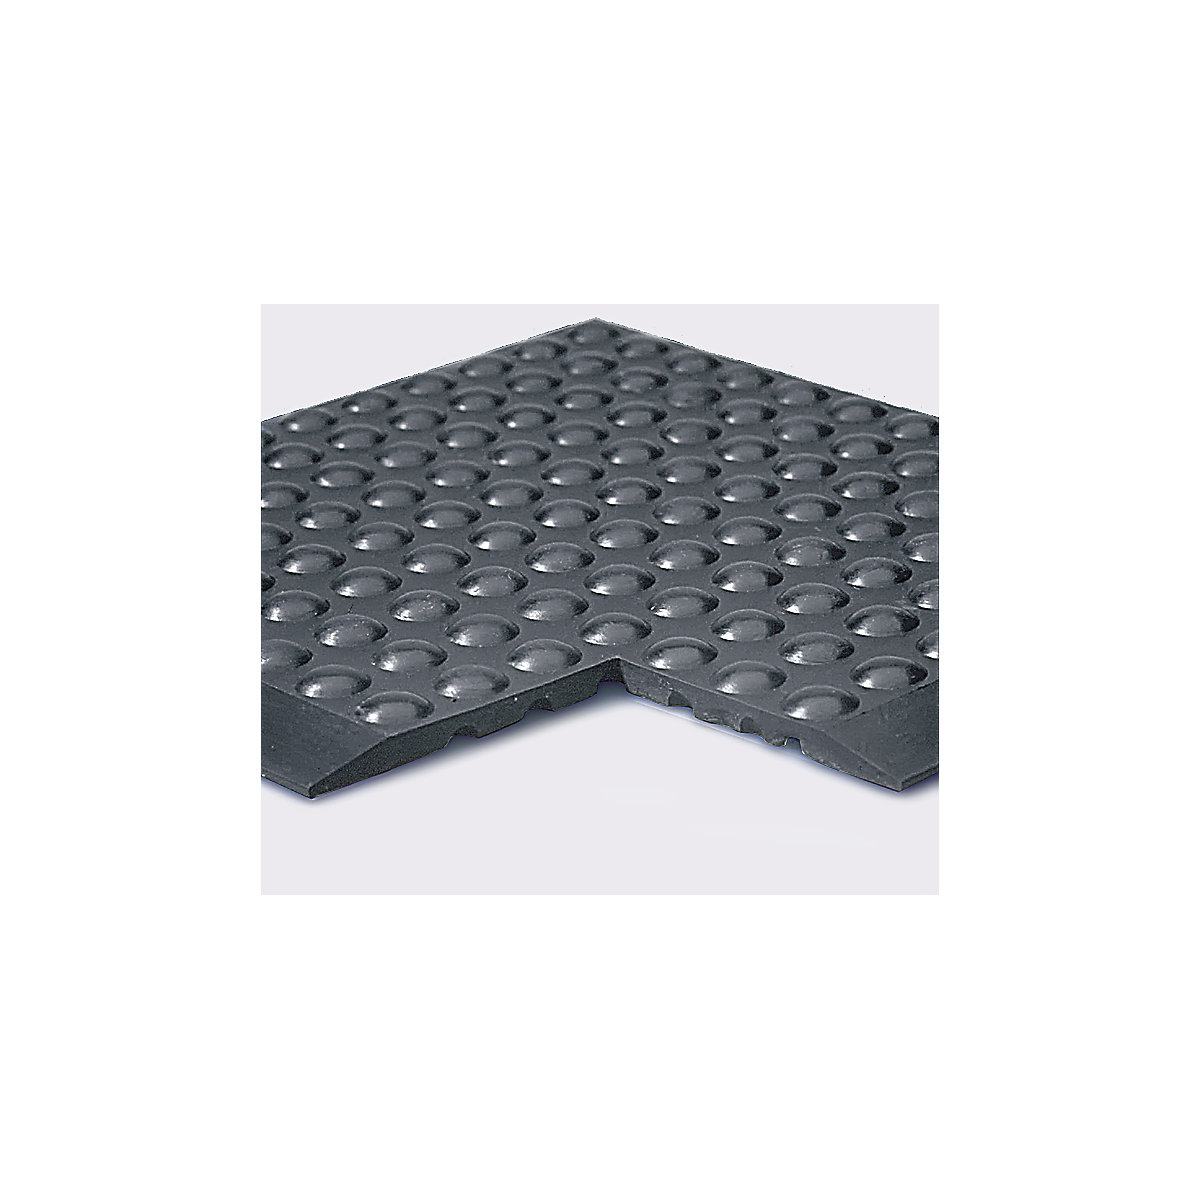 Bubblemat anti-fatigue matting (Product illustration 4)